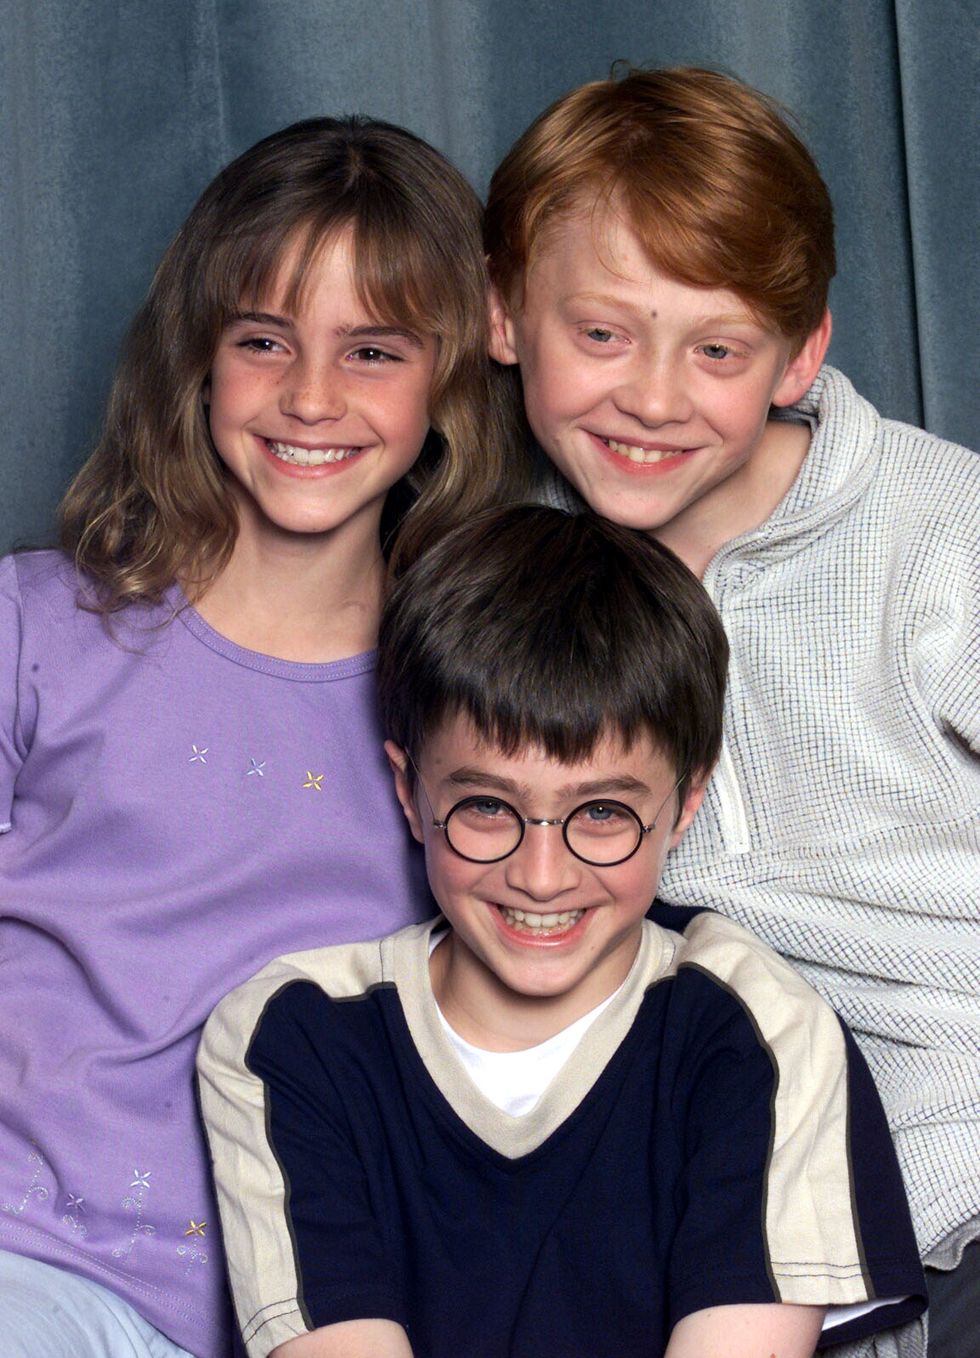 Emma Watson, Rupert Grint and Daniel Radcliffe attend their first Harry Potter photocall